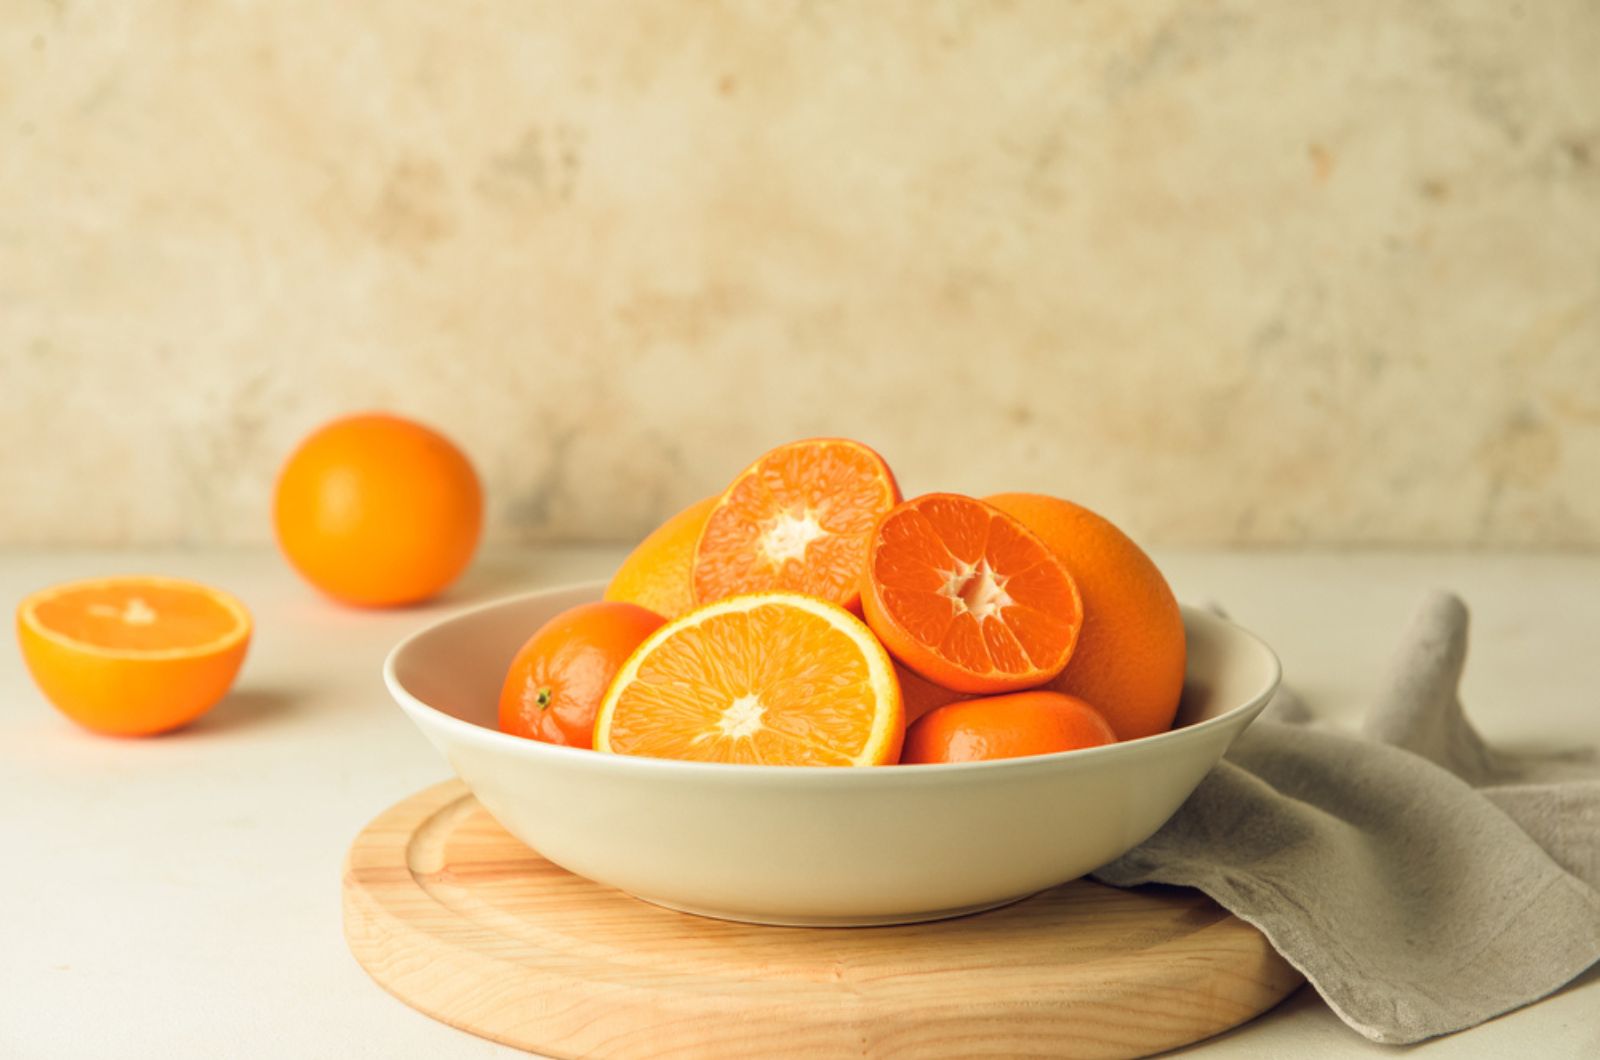 Oranges on plate